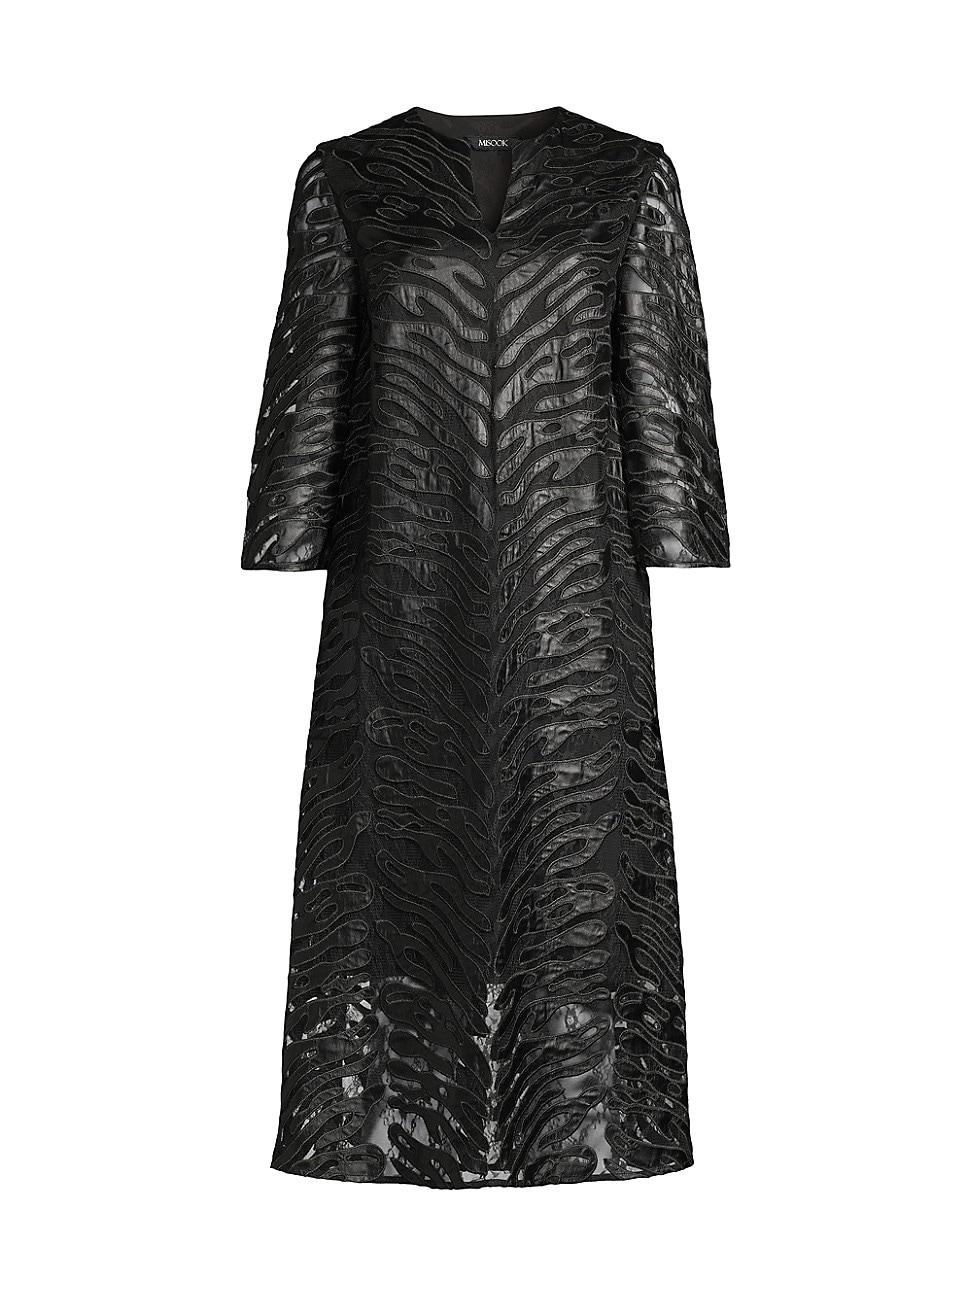 Misook Zebra Stripe Faux Leather Midi-dress in Black | Lyst